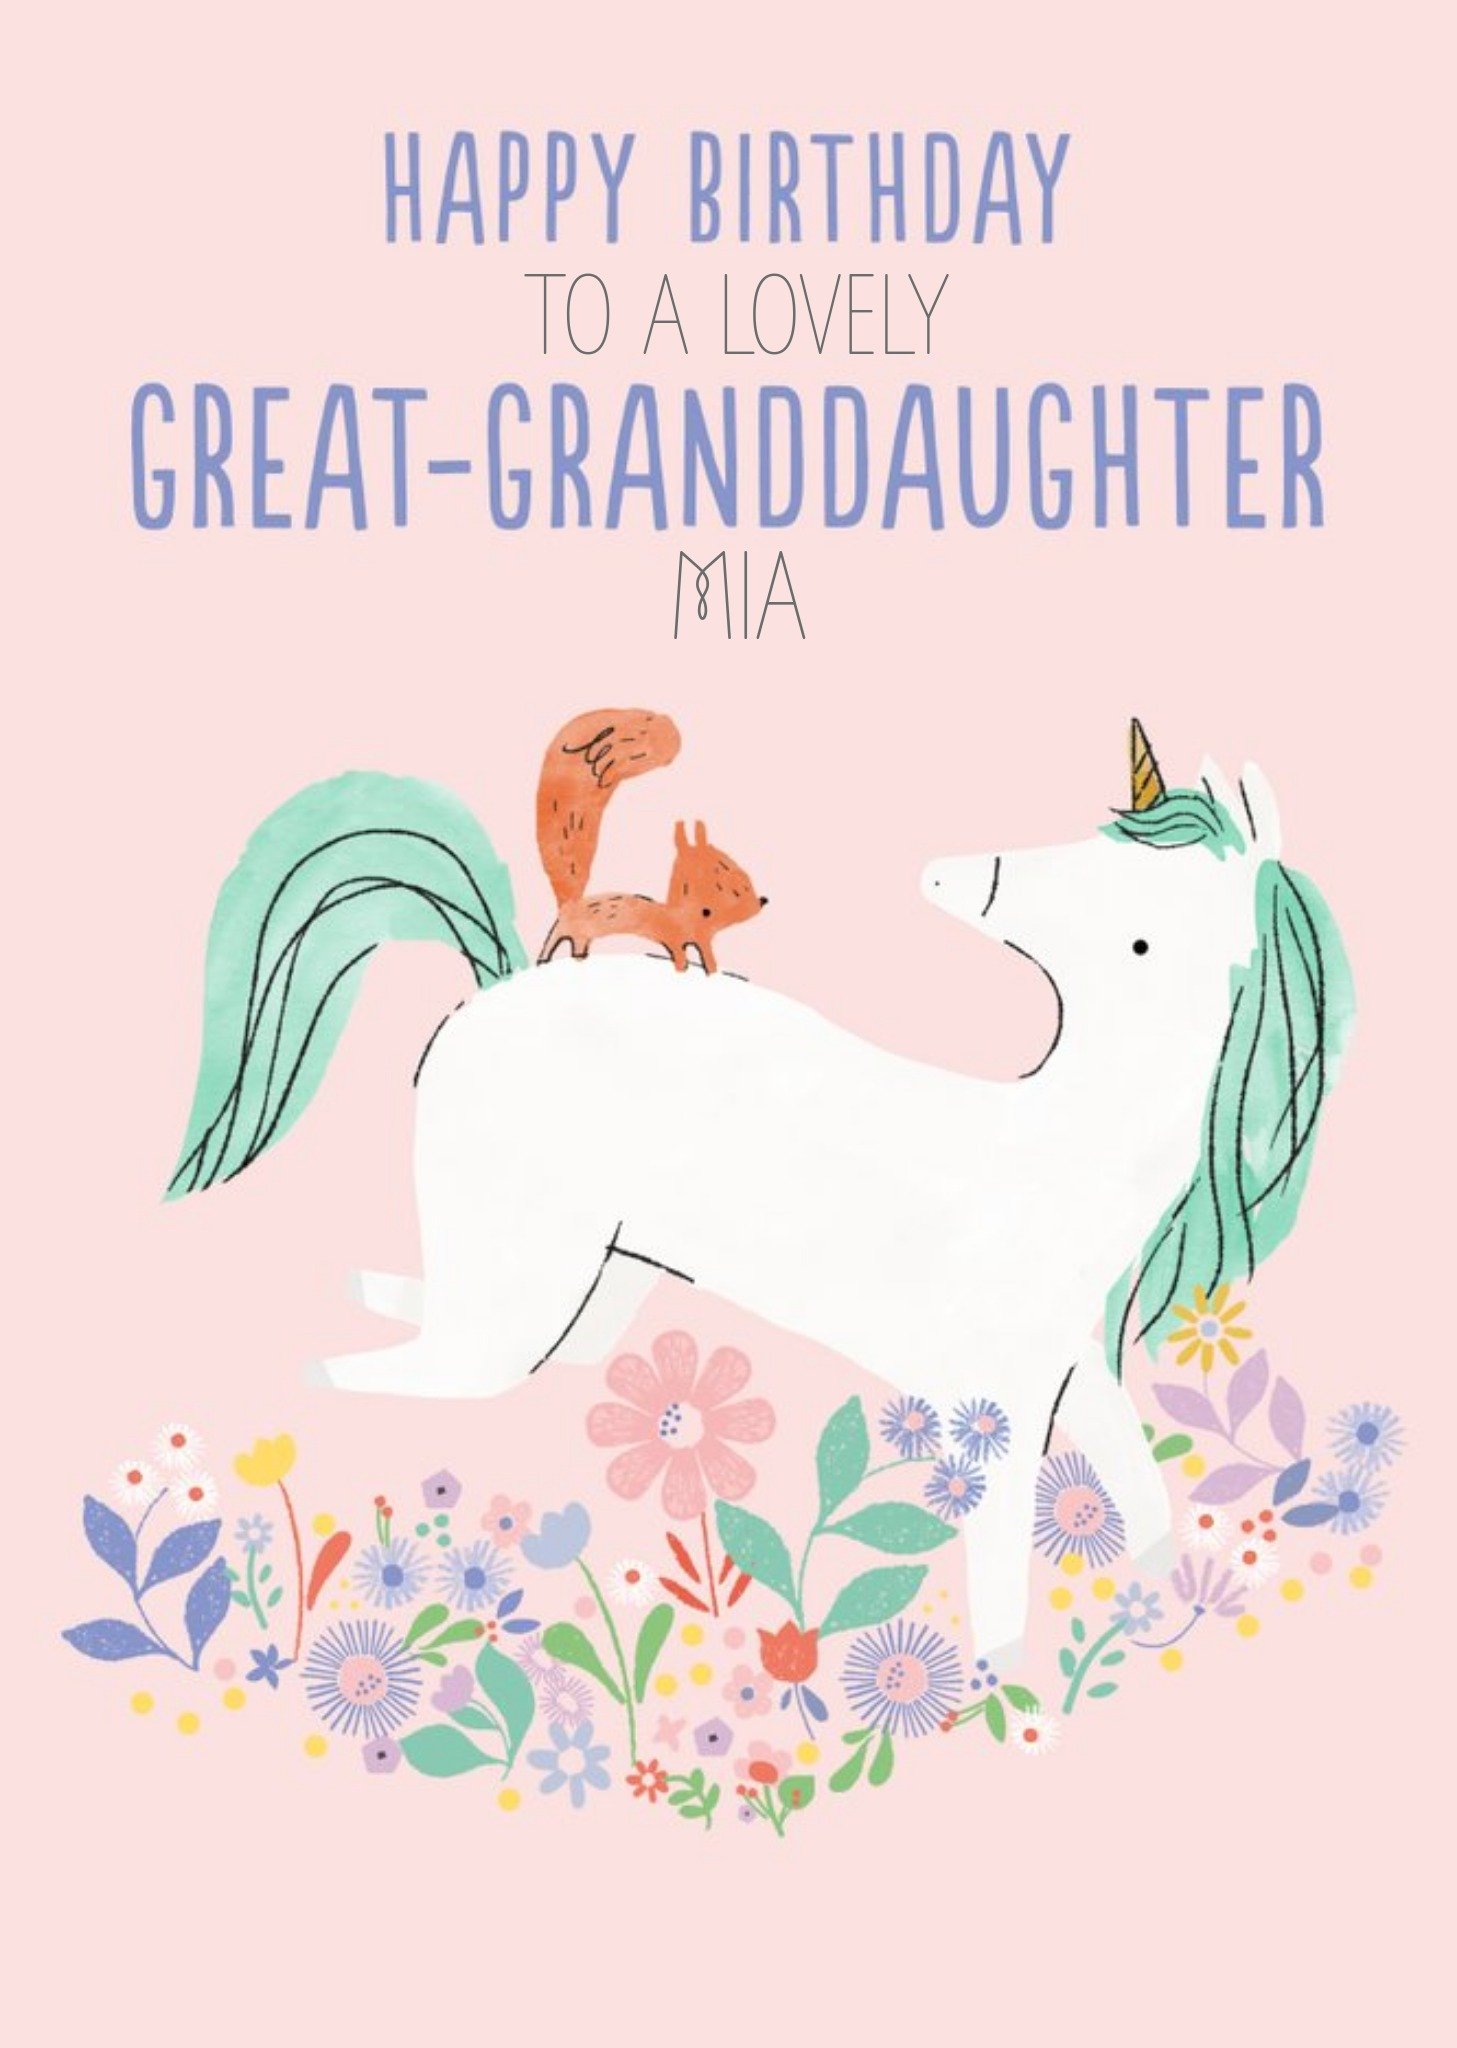 Moonpig Cute Illustrative Unicorn And Squirrel Great-Granddaughter Birthday Card Ecard